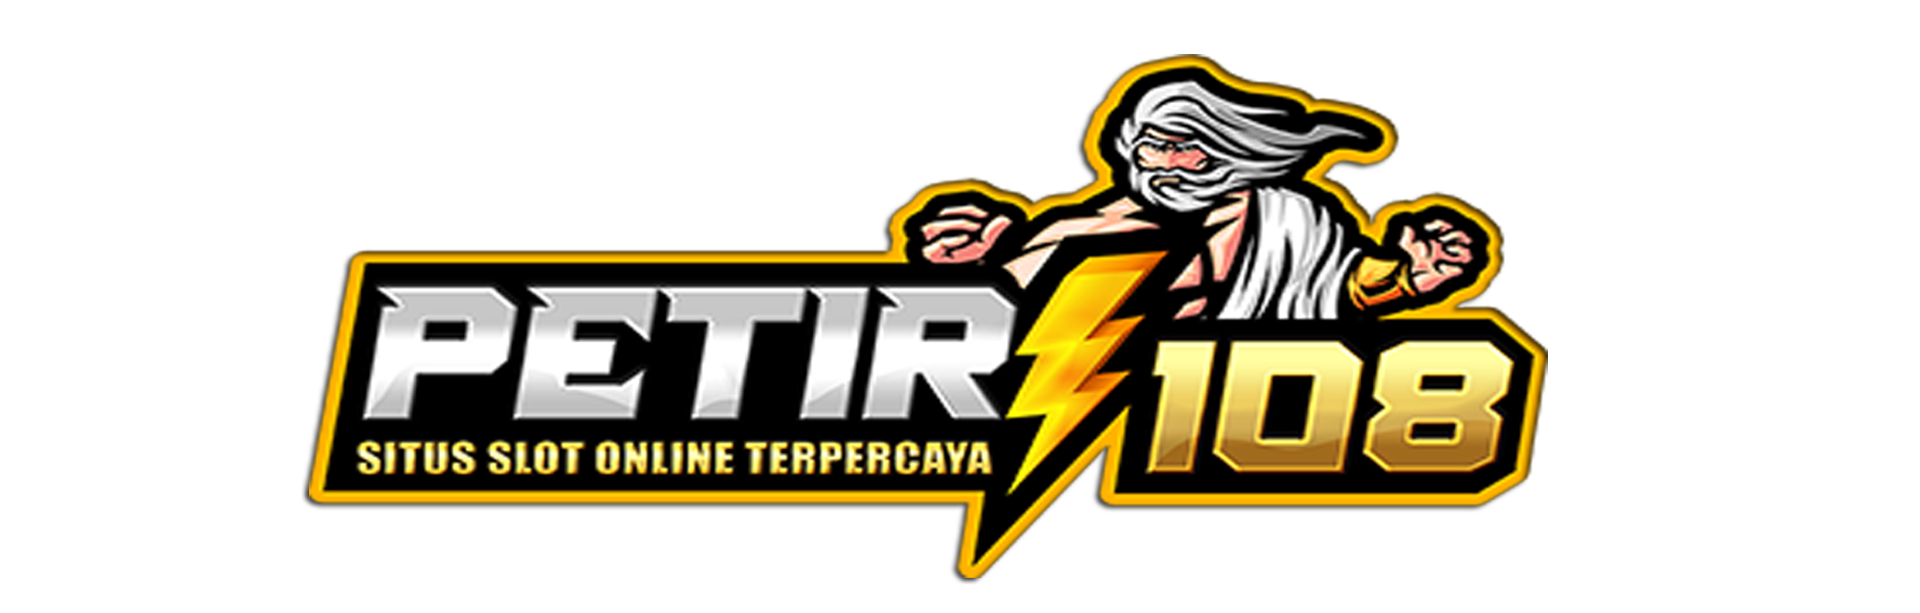 PETIR108 Main logo